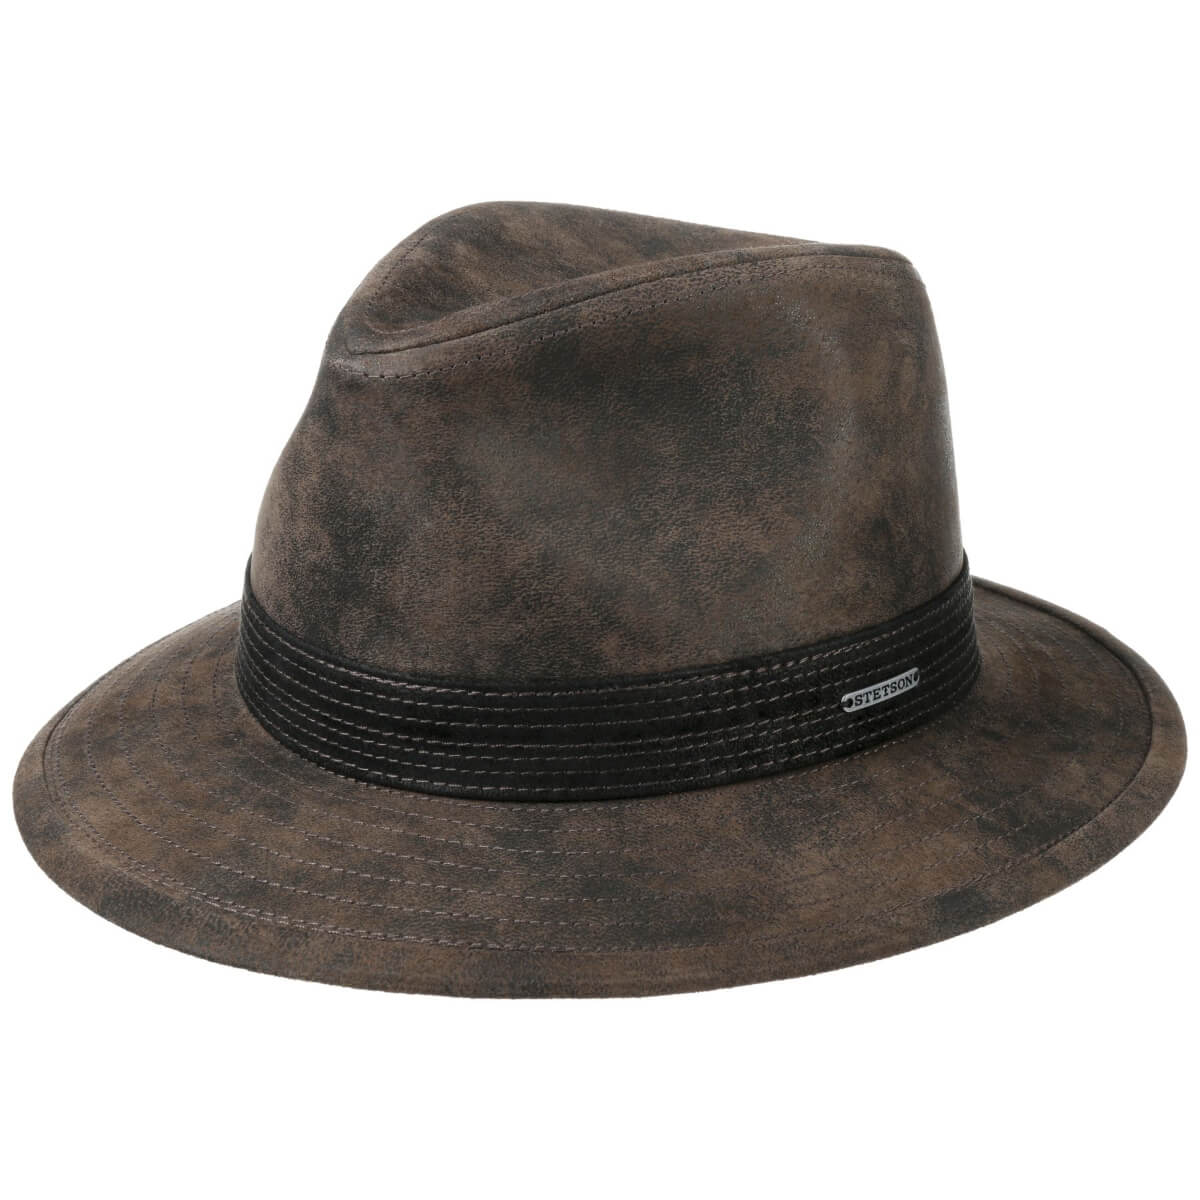 Stetson Jacky Pigskin Traveller Leather Hat Brown